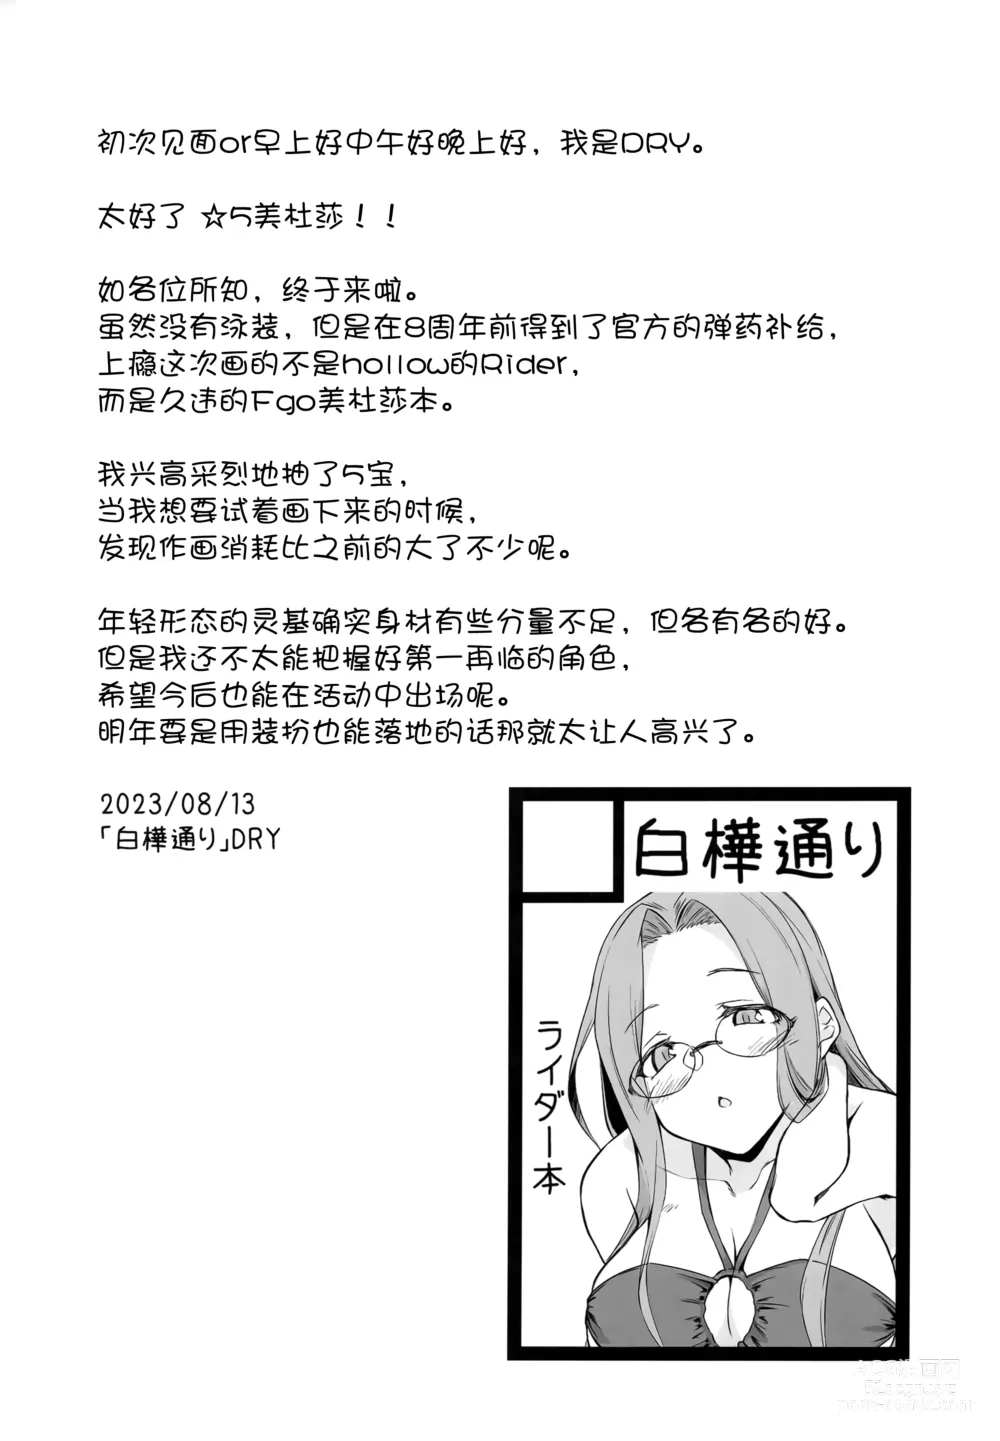 Page 4 of doujinshi Yoru no Double Medusa